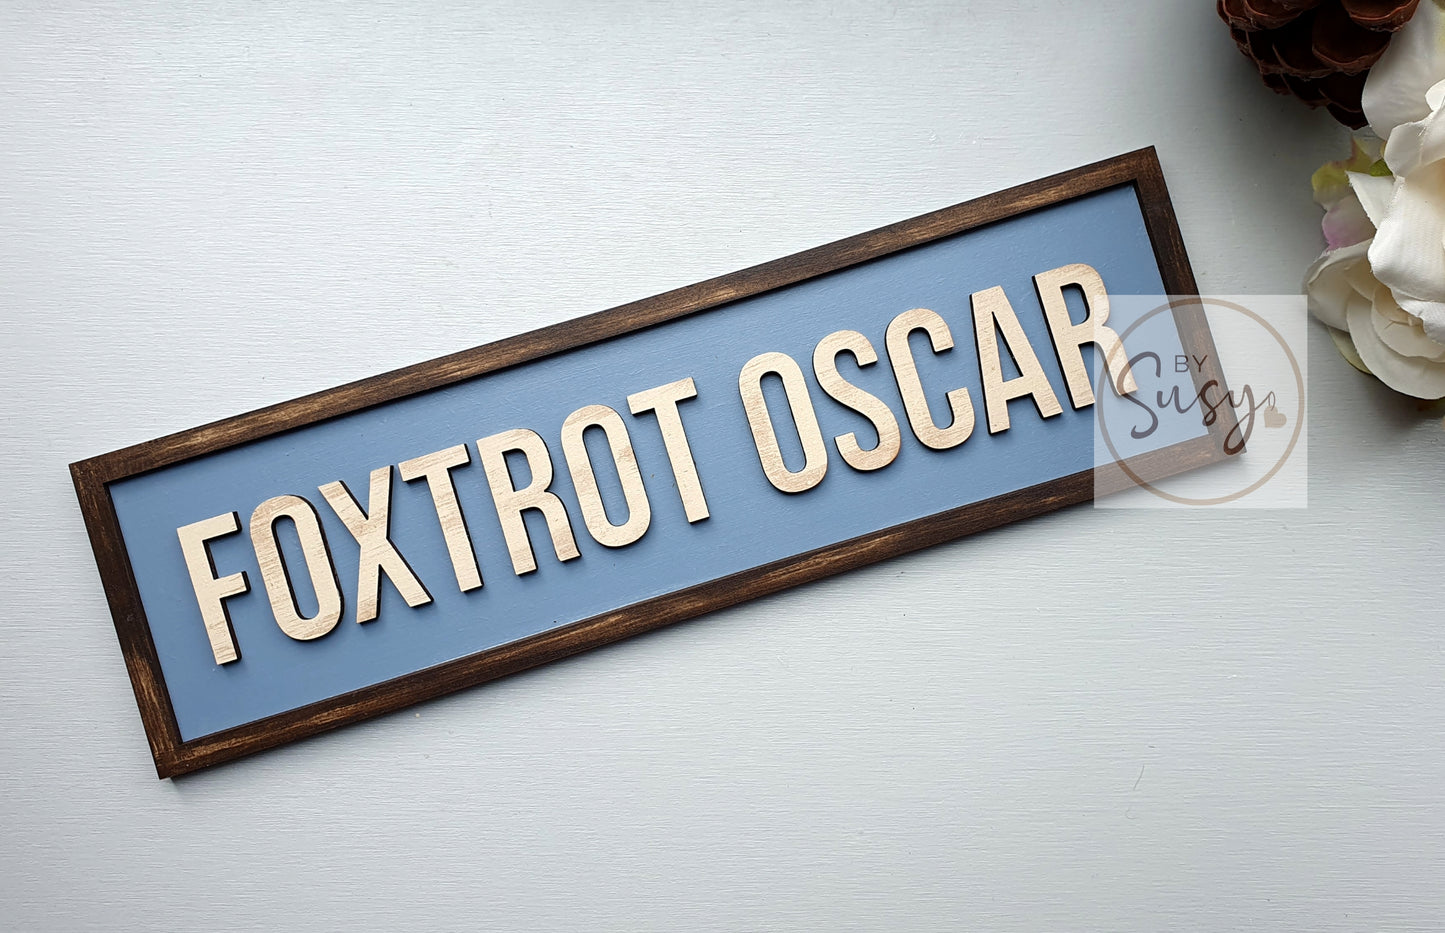 Foxtrot Oscar Long Layered Rustic Style Sign